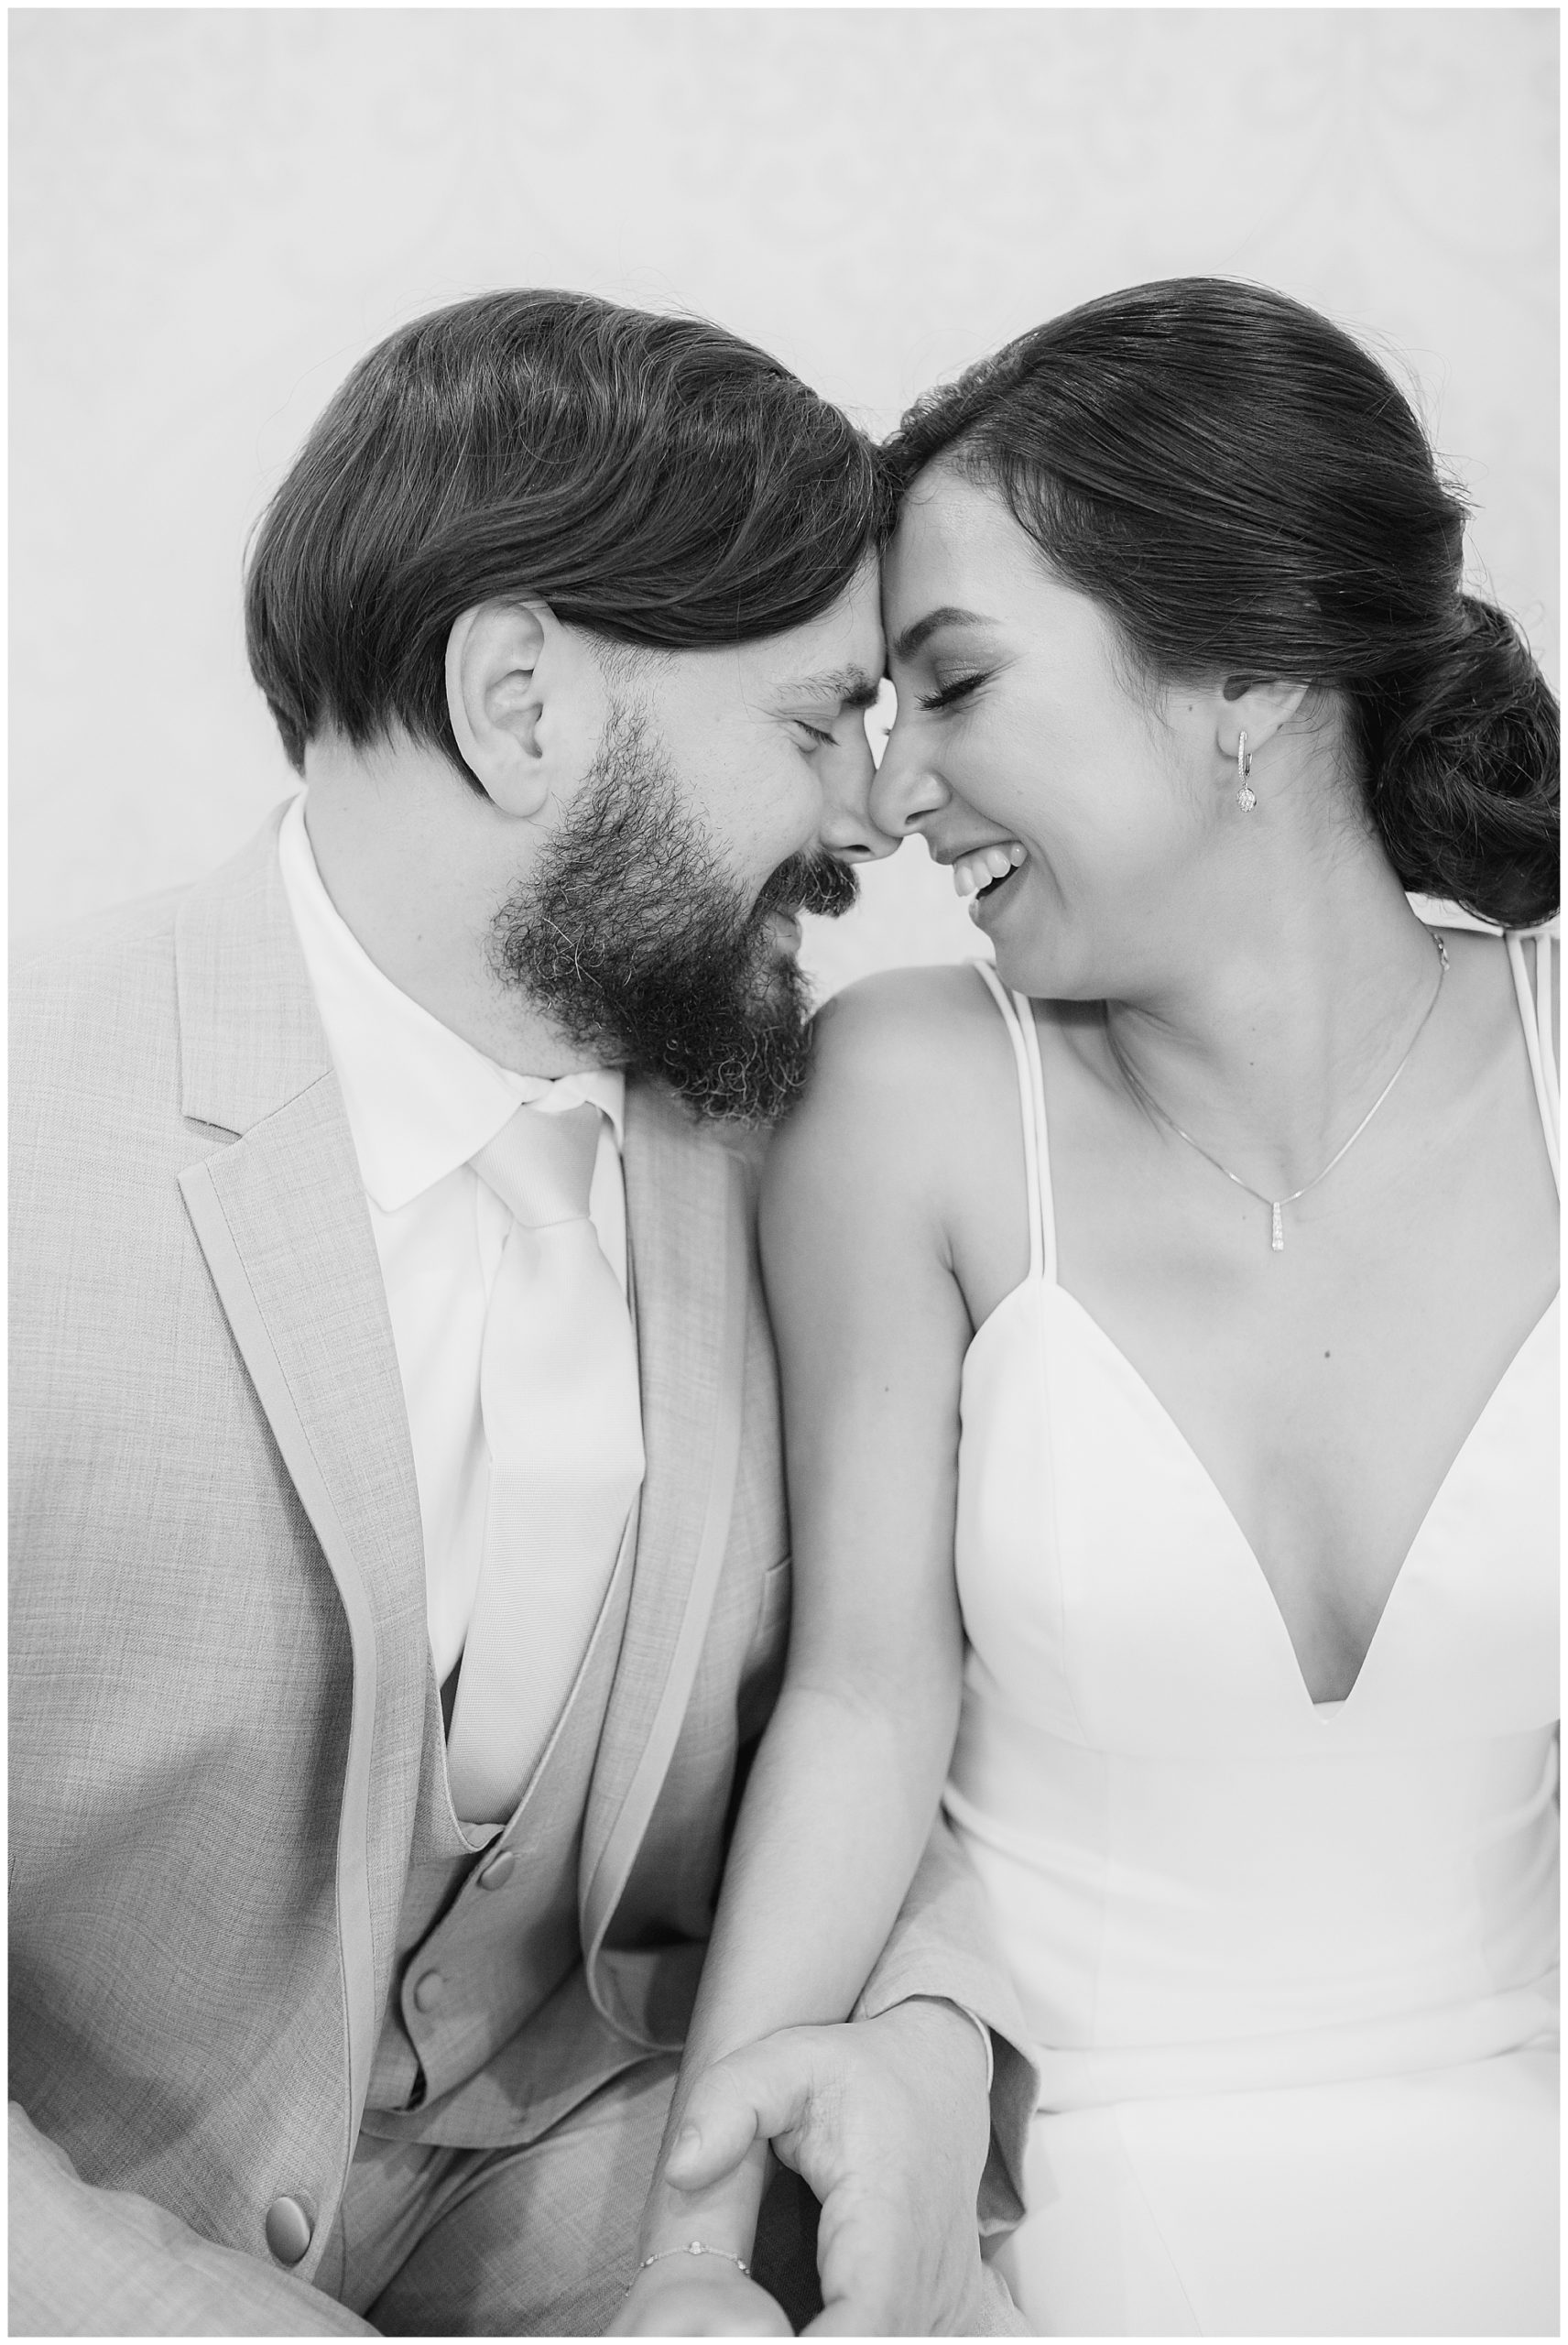 couple nuzzled, black and white wedding portrait, romantic wedding photos